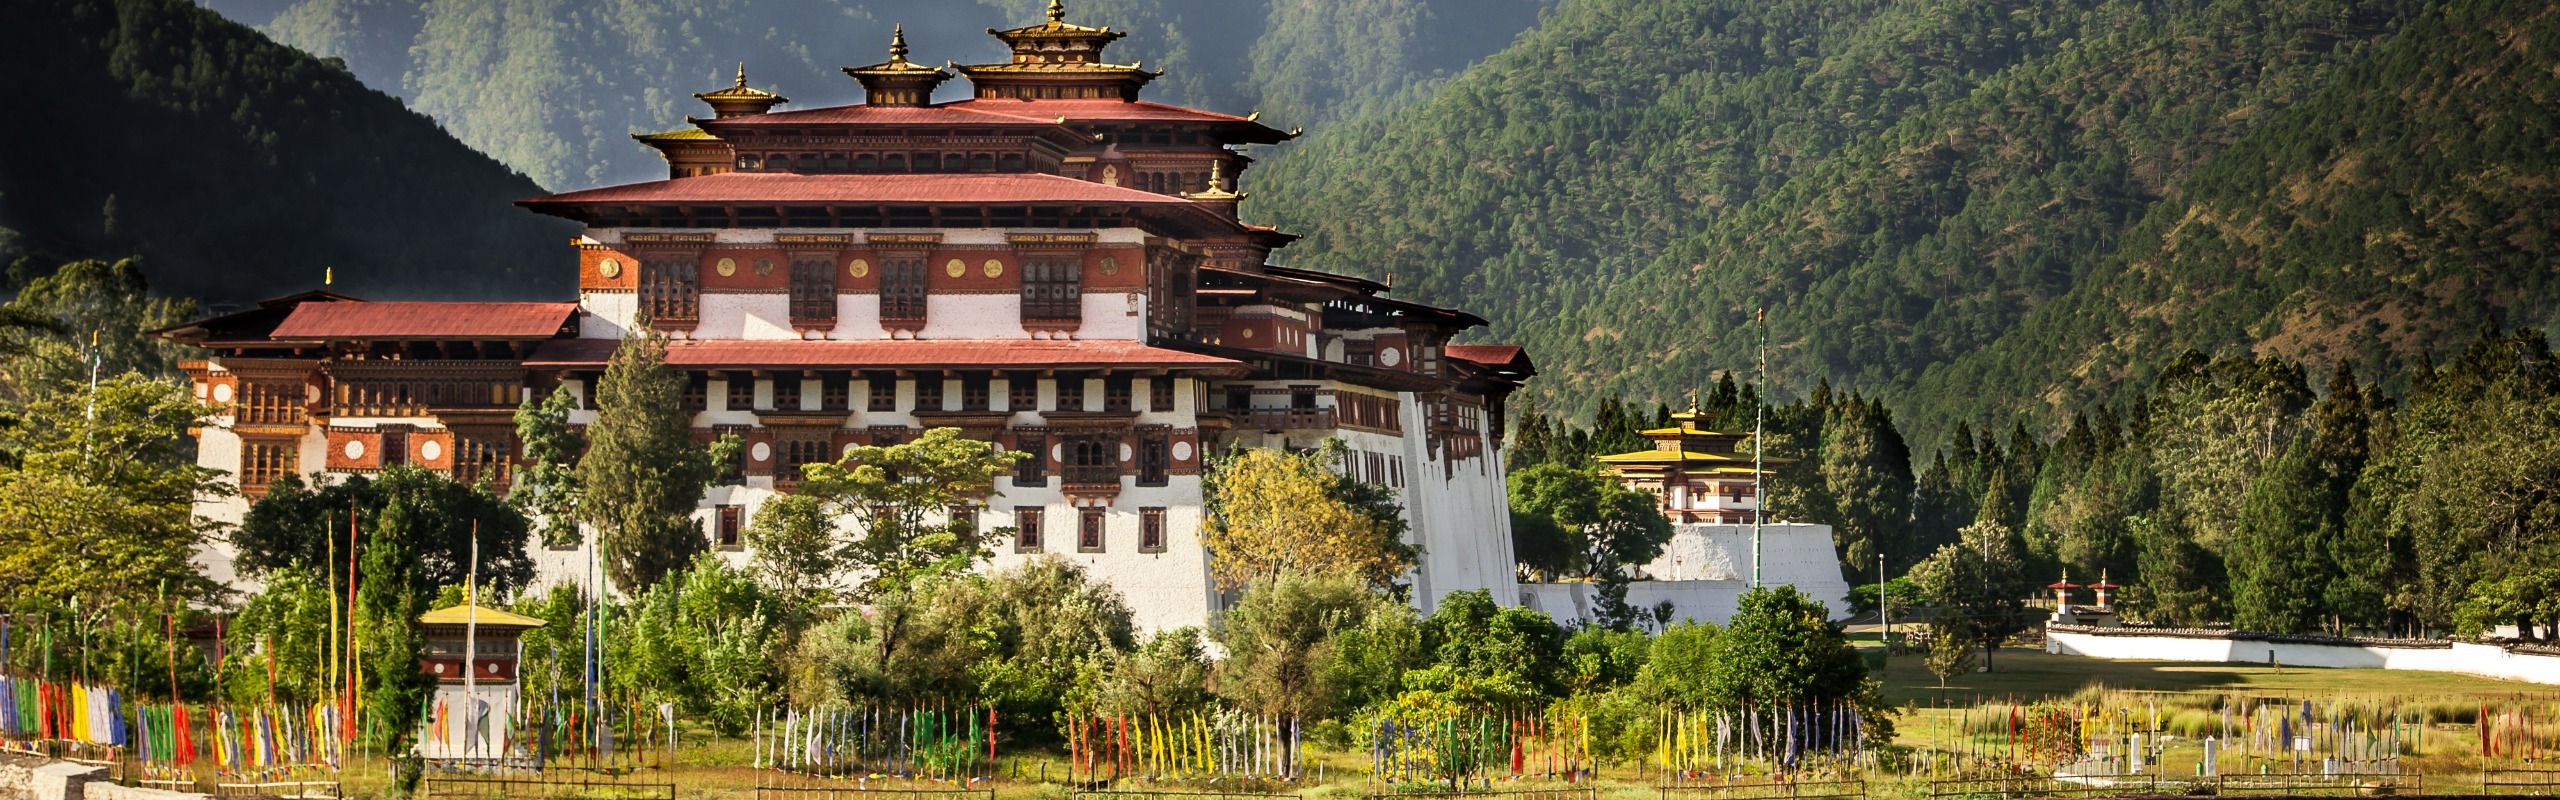 14-Day Nepal and Bhutan Tour